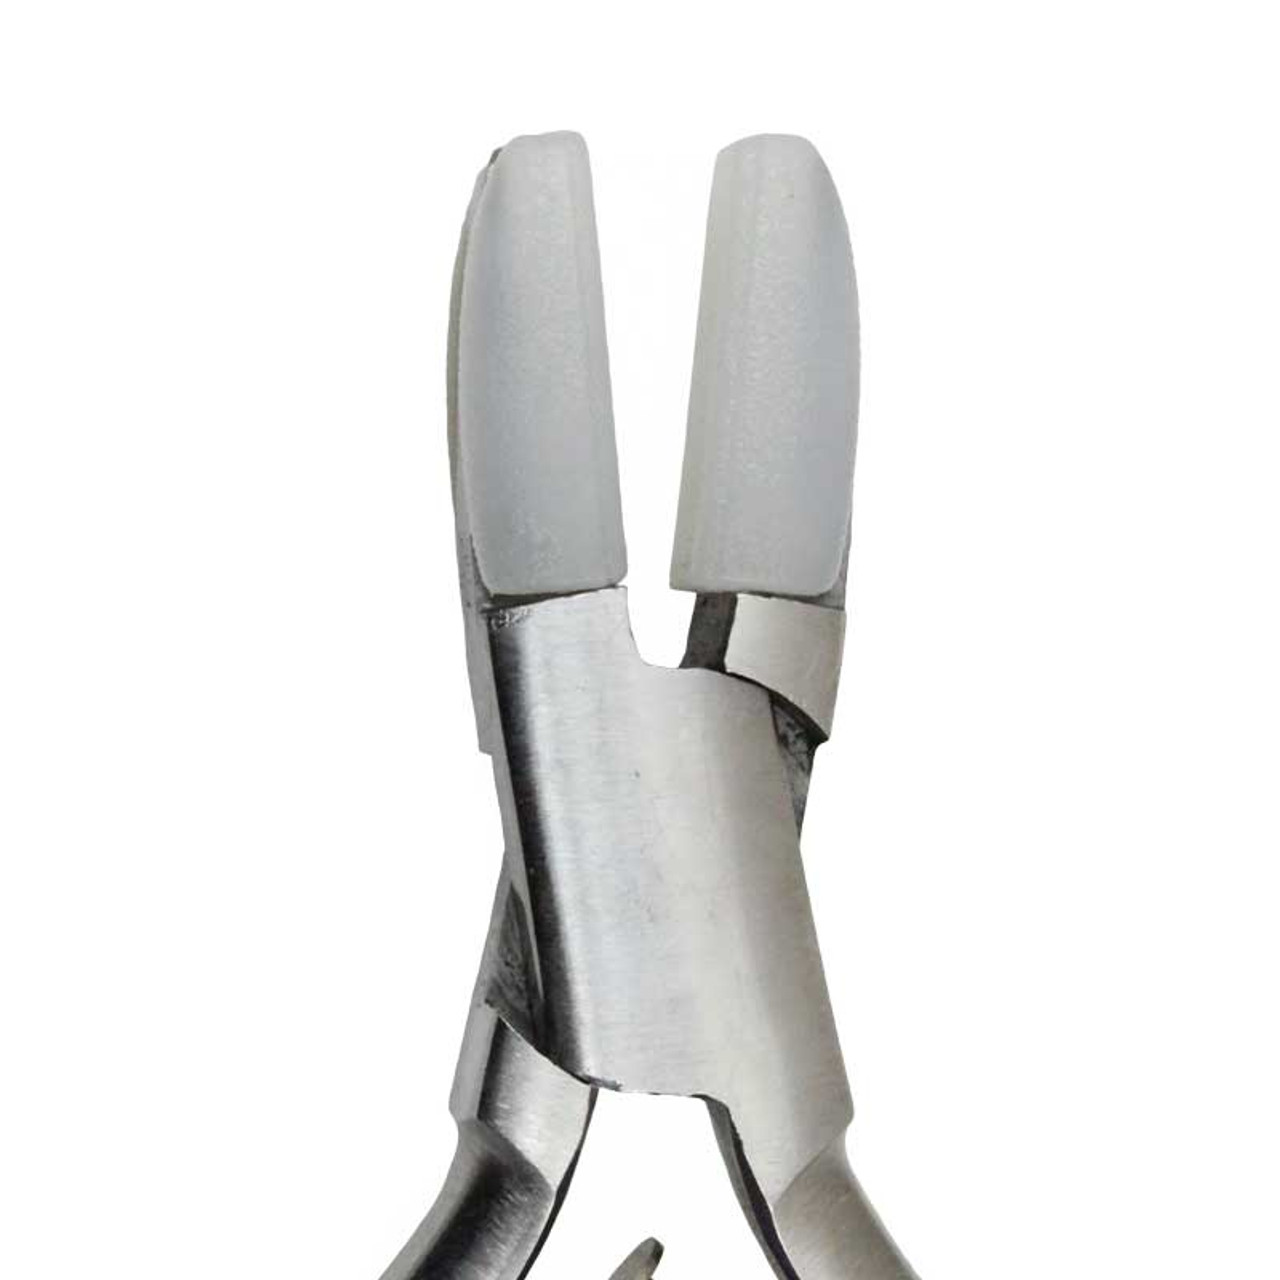 Parallel Flat Nylon Jaw Pliers Safe Jewelry Tool